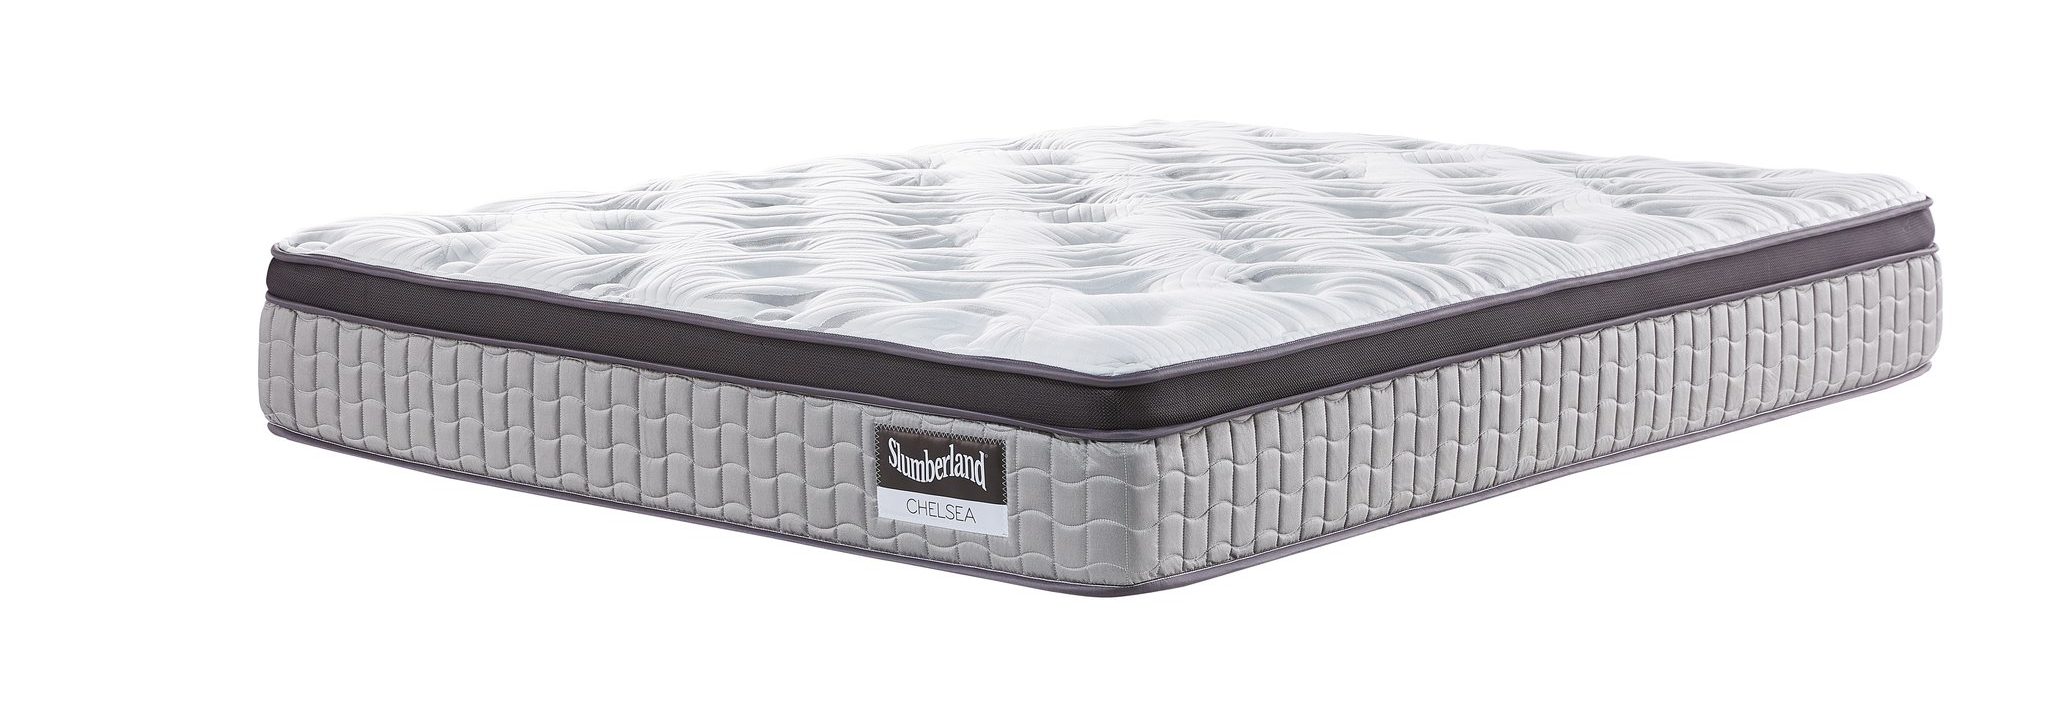 slumberland chelsea mattress plush